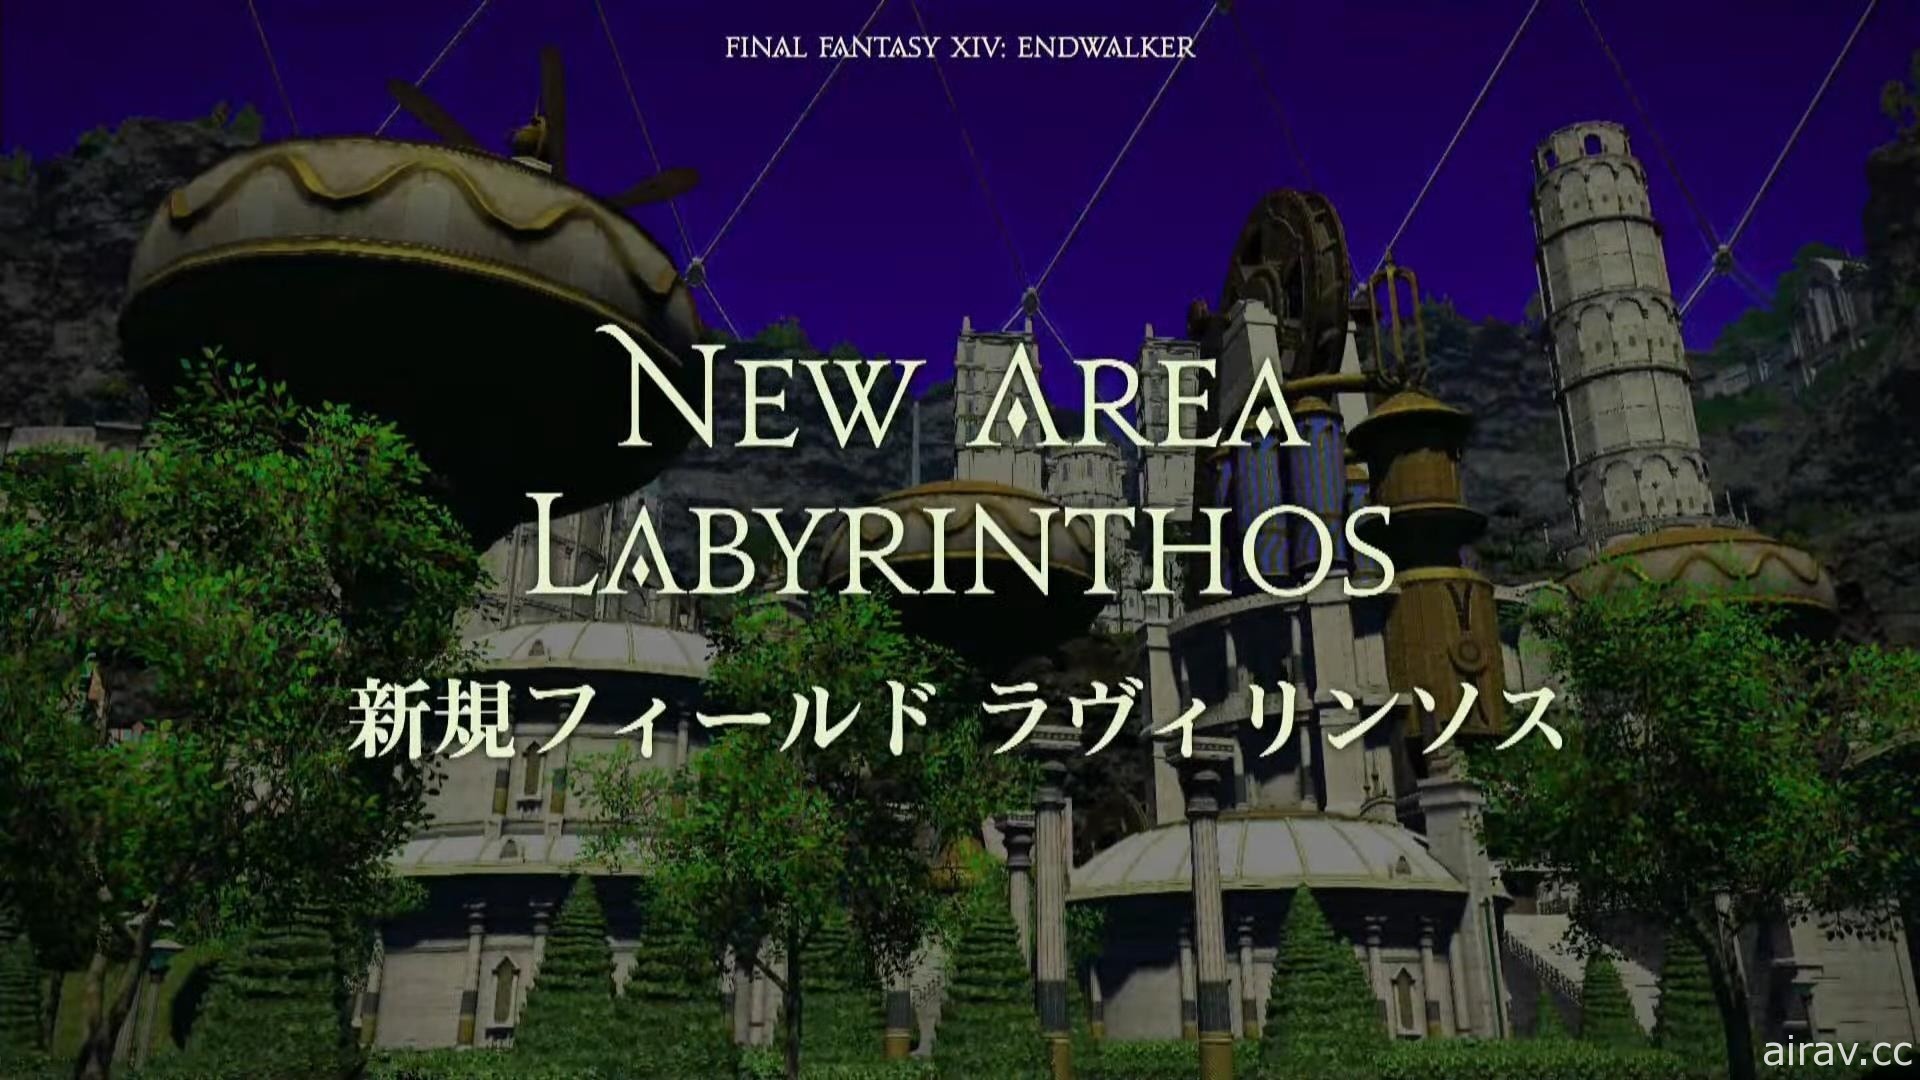 《Final Fantasy XIV》最新扩充资料片《晓月的终焉》公开新区域和城市的新资讯